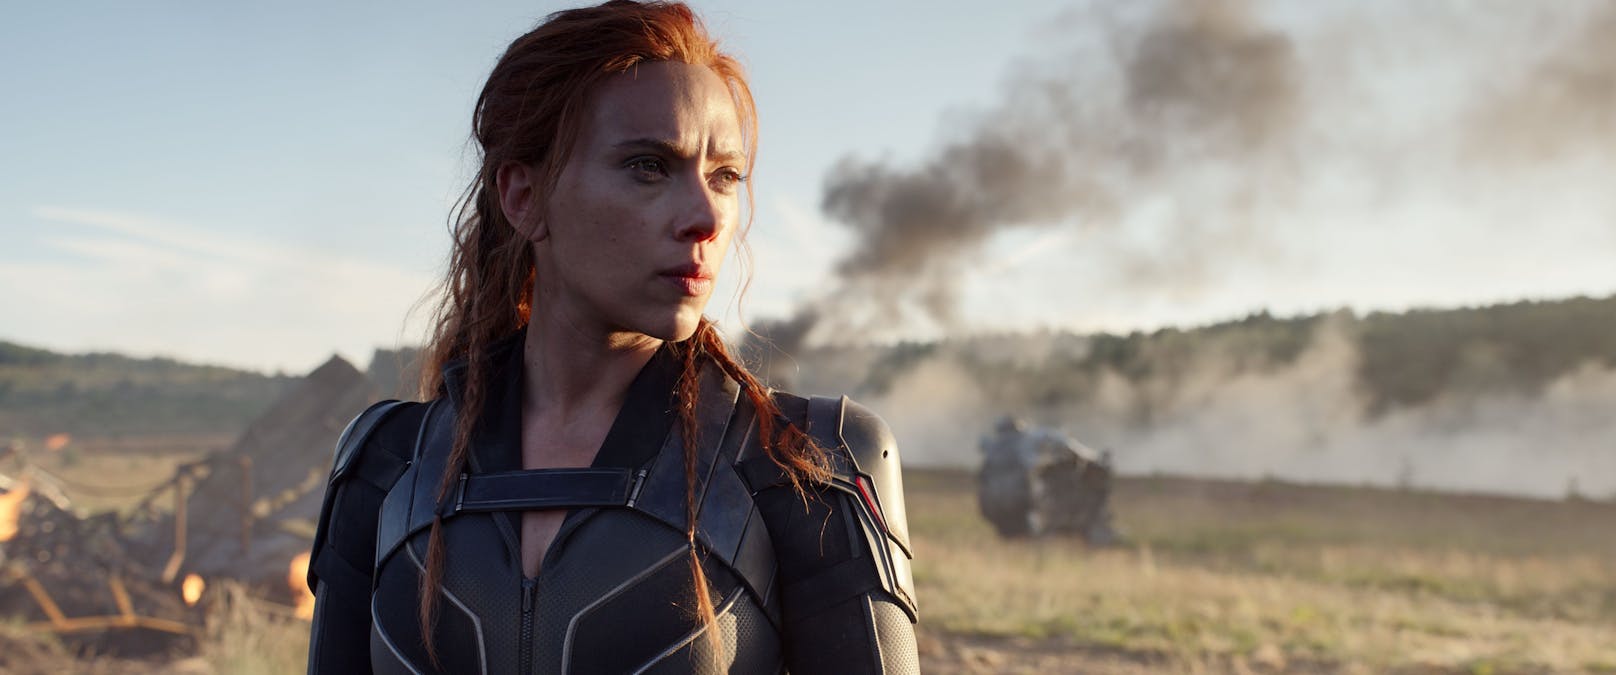 <strong>BLACK WIDOW (April 2021):</strong> Neues aus dem Marvel Cinematic Universe: Der erste Solo-Auftritt von Natasha Romanoff (<strong>Scarlett Johansson</strong>) spielt zwischen den "Avengers"-Filmen "Civil War" und "Infinity War". <strong>&gt;&gt; <a href="https://www.youtube.com/watch?v=aQAc4fTneG8">HIER</a> geht's zum Trailer &lt;&lt;</strong><br>